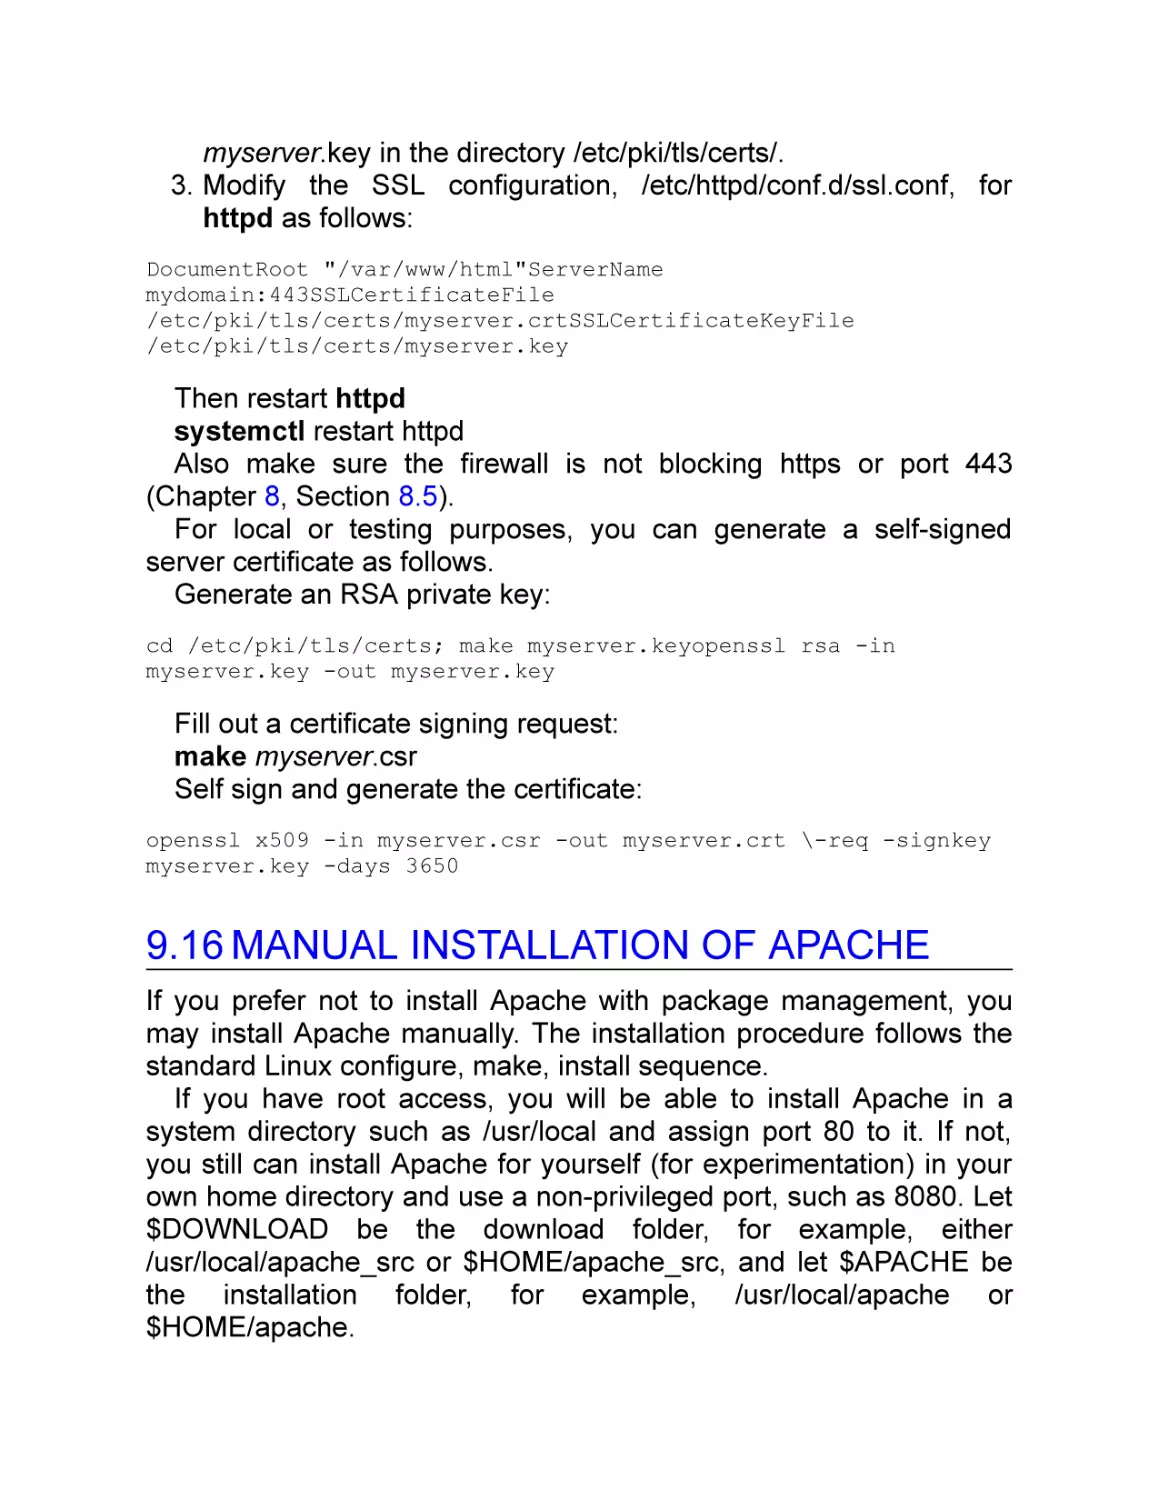 9.16 Manual Installation of Apache